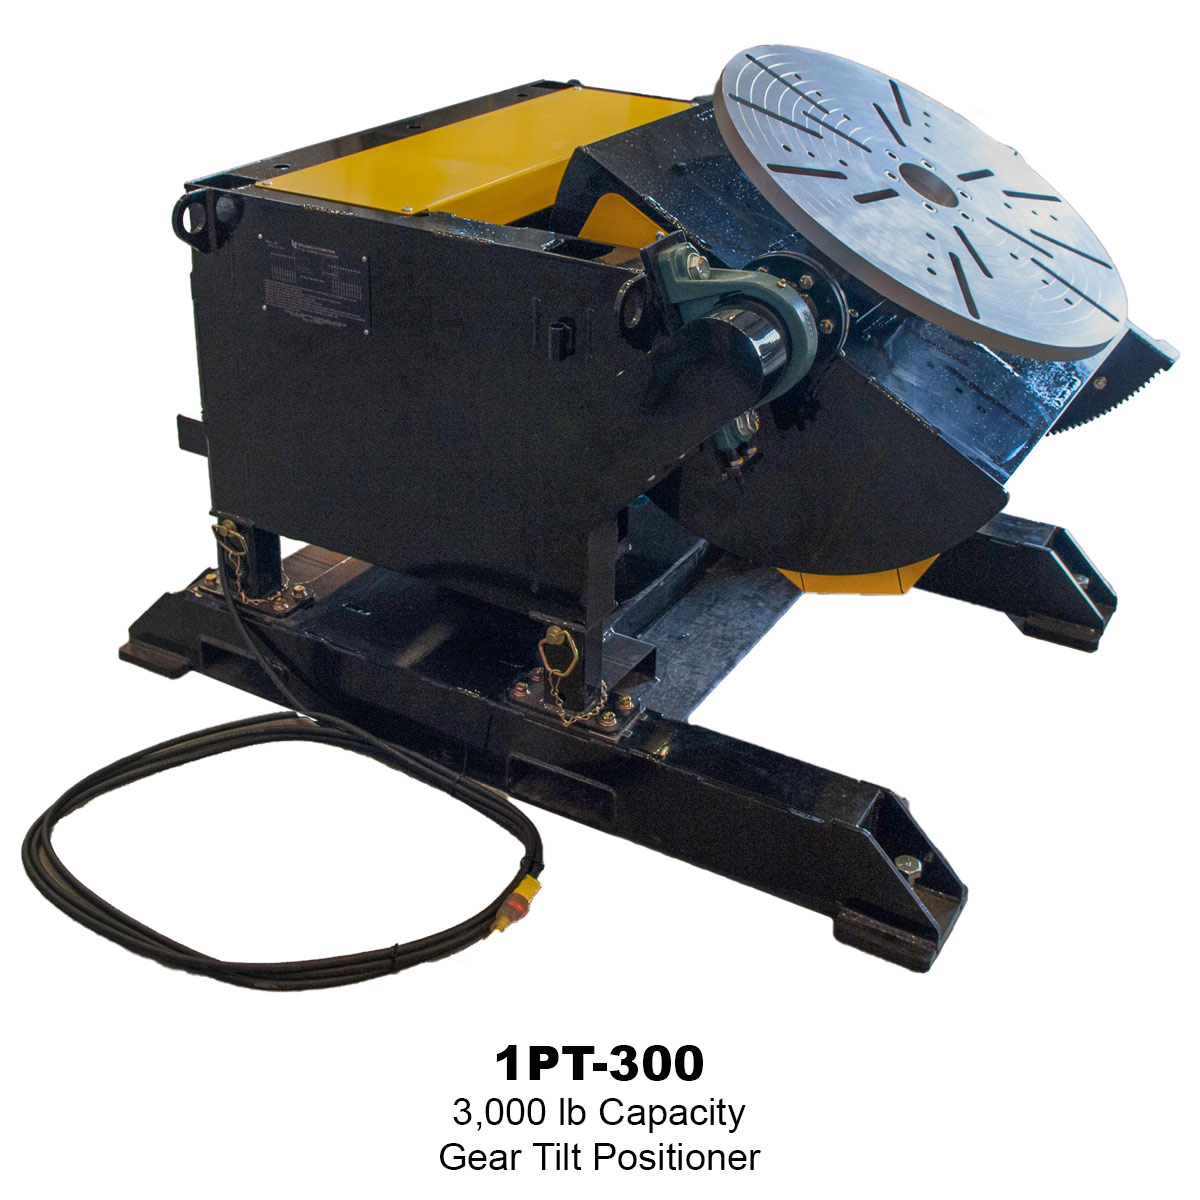 1HT-300 welding positioner rotator